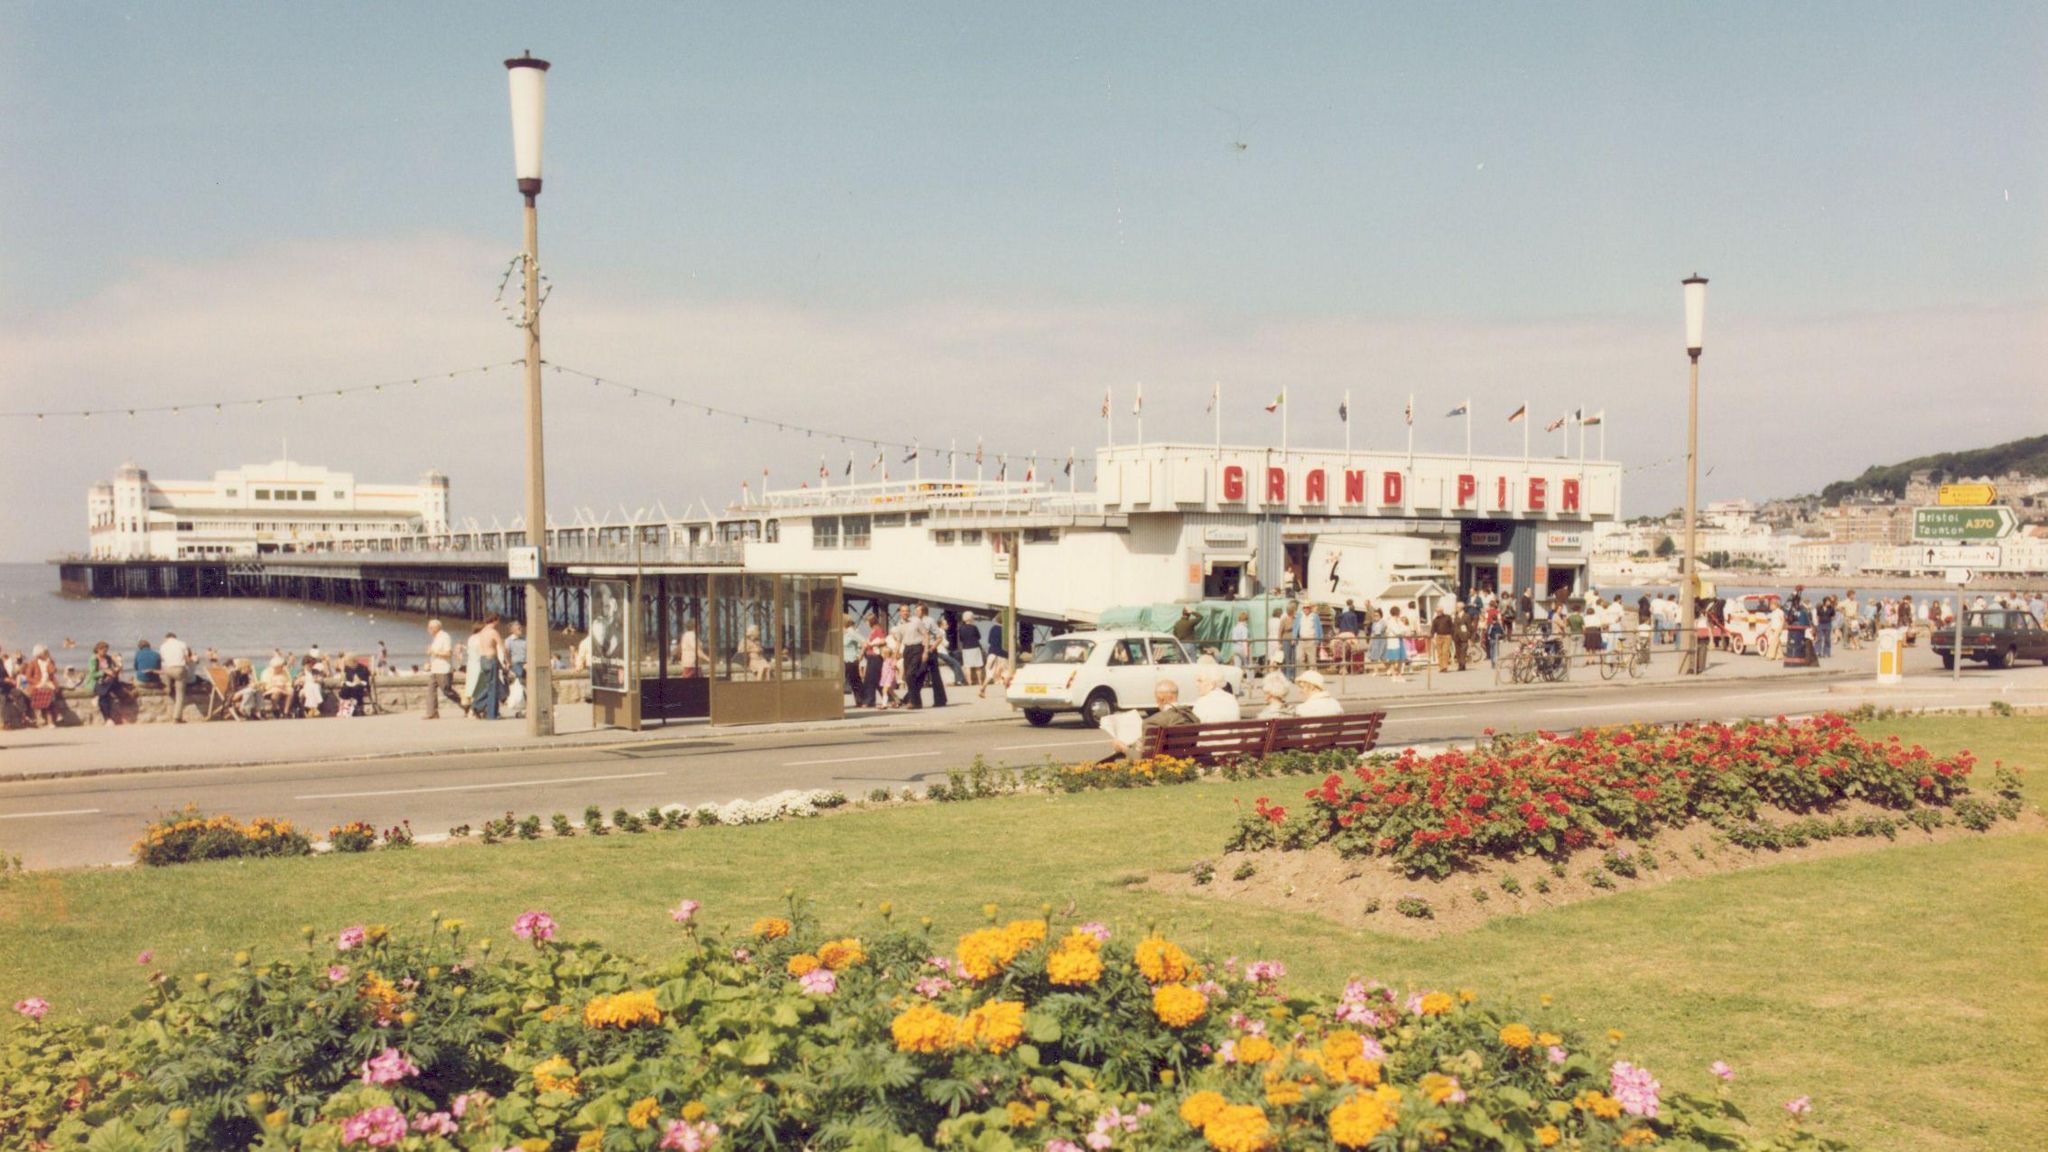 The Grand Pier, 1980s